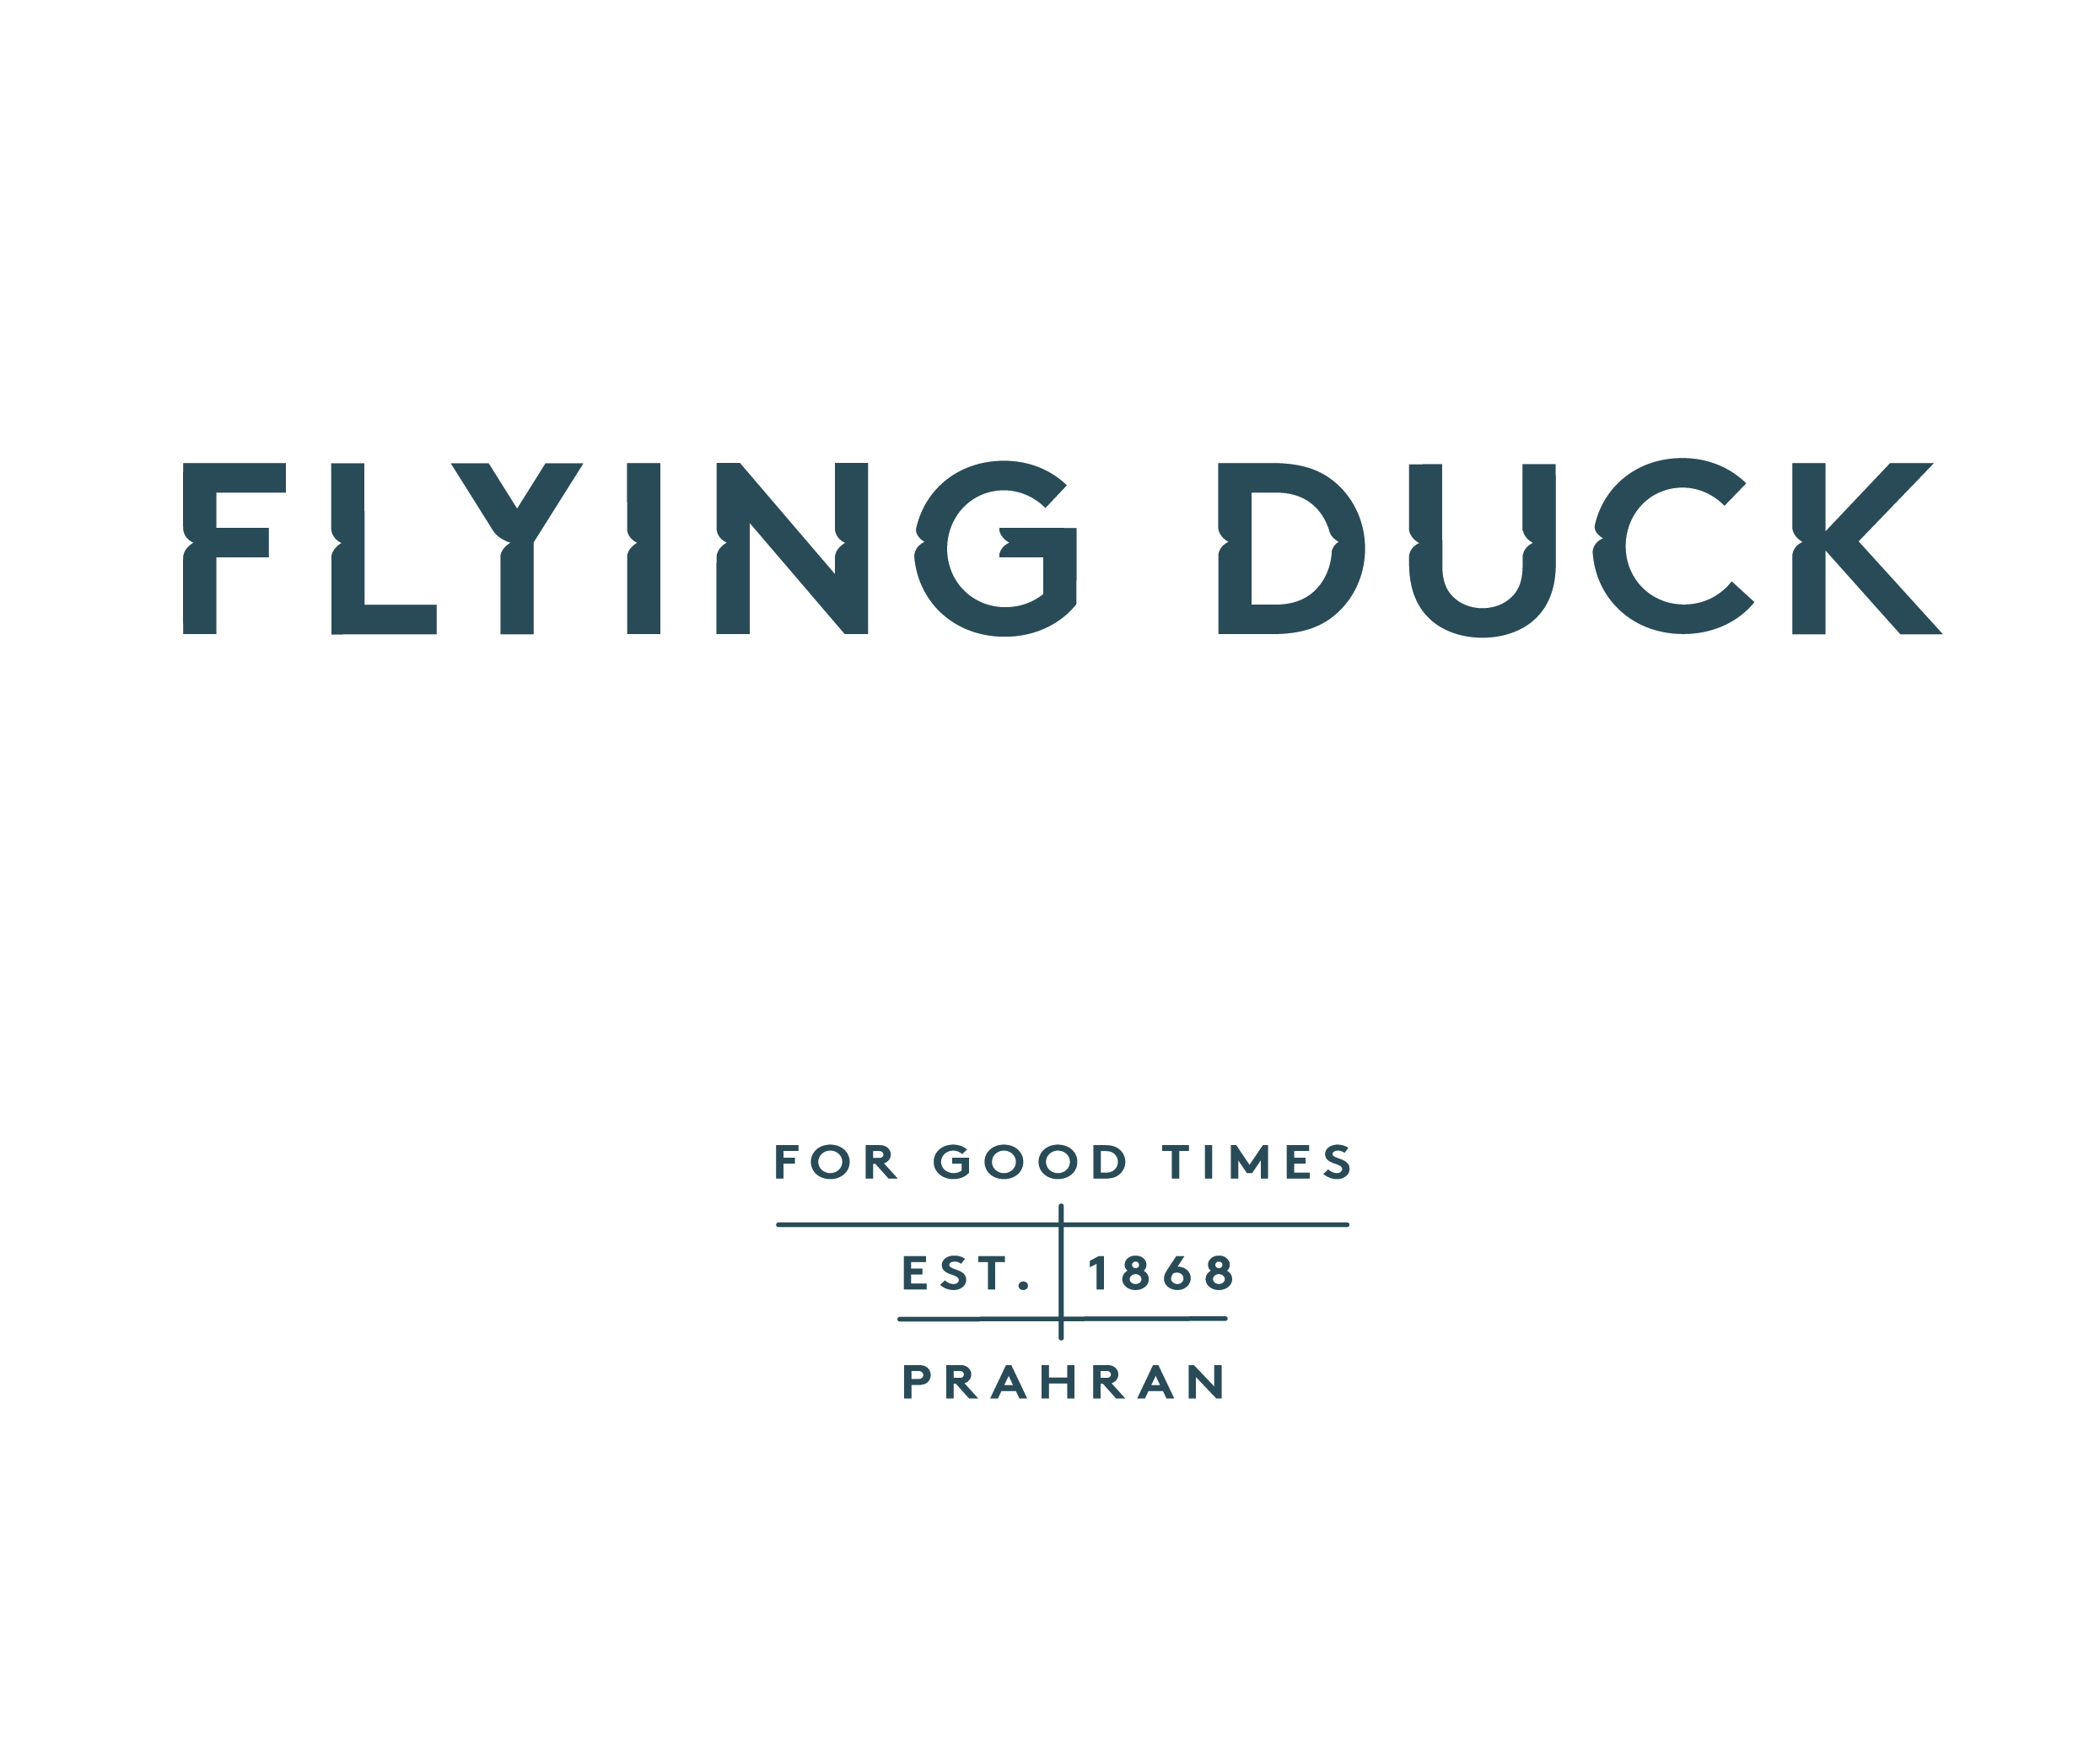 Flying Duck Hotel